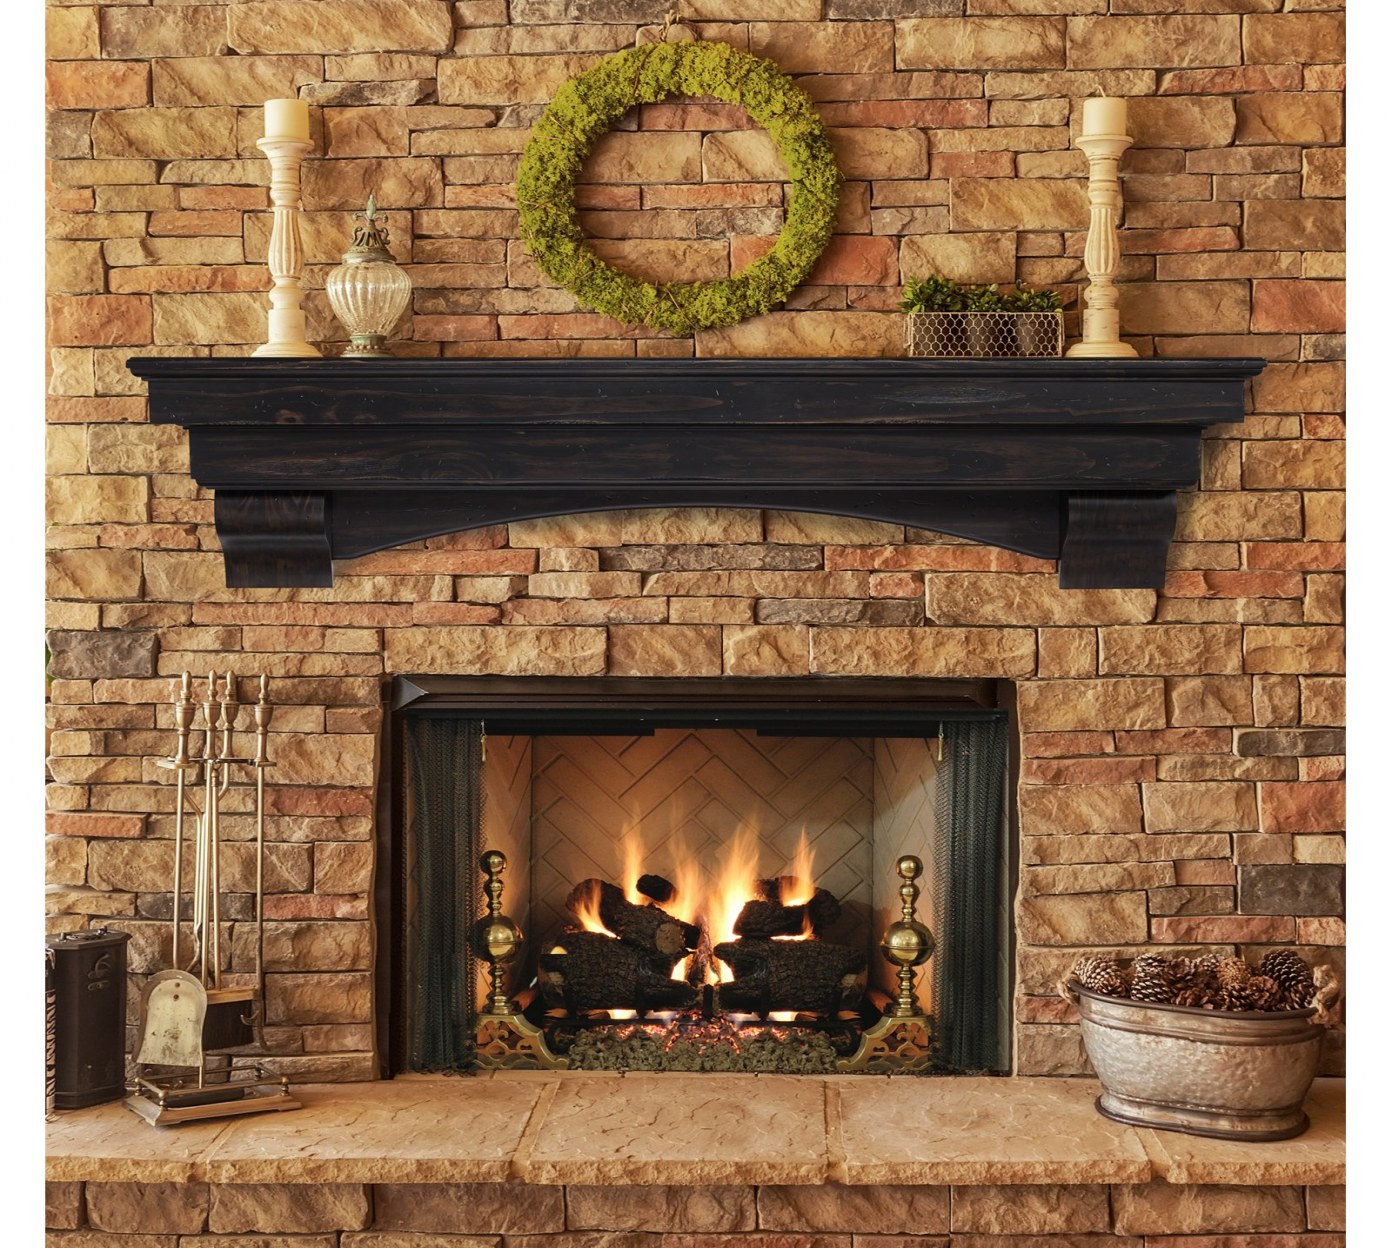 Replacing Fireplace Mantel Fresh Fireplace Mantel Shelf Relatively Fireplace Surround with